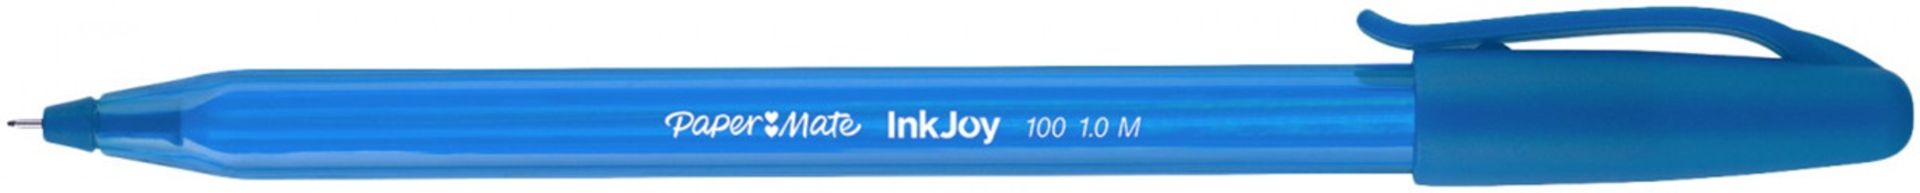 1,000 x Papermate Inkjoy Pens | Total RRP £500